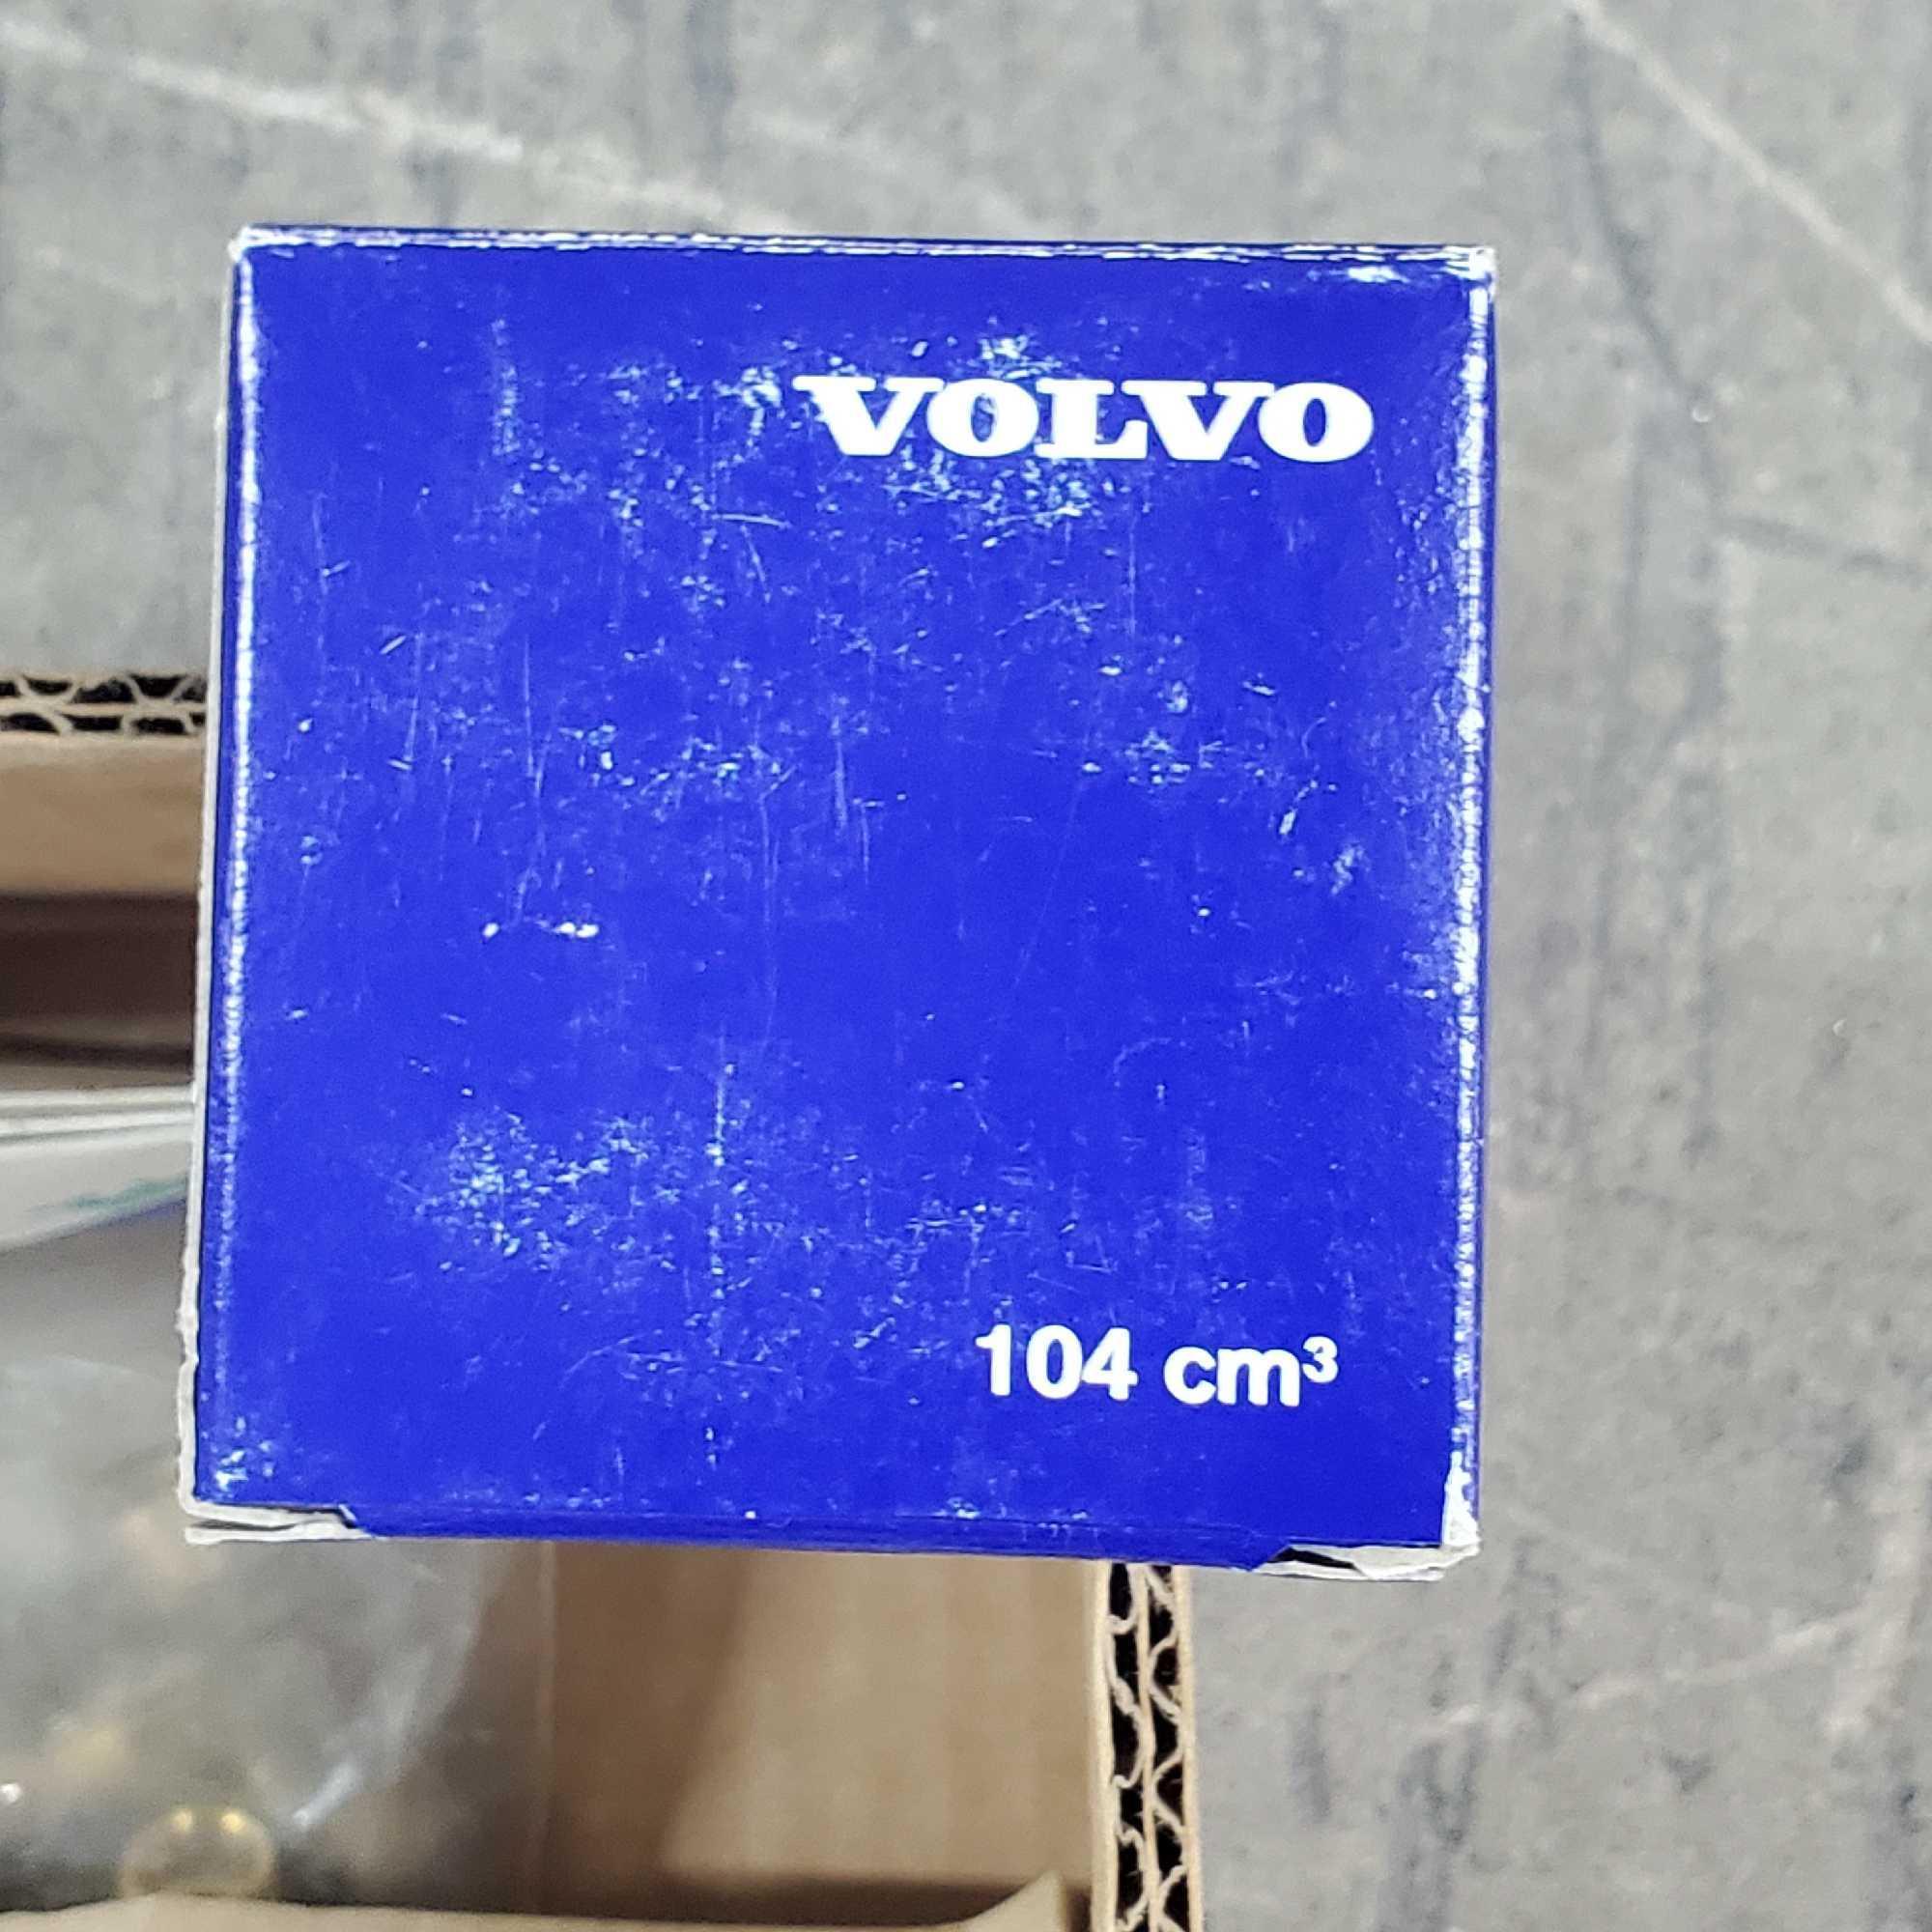 Box Volvo Suzuki Onan marine oil filters spark plugs propeller ball bering hydraulic sterring parts